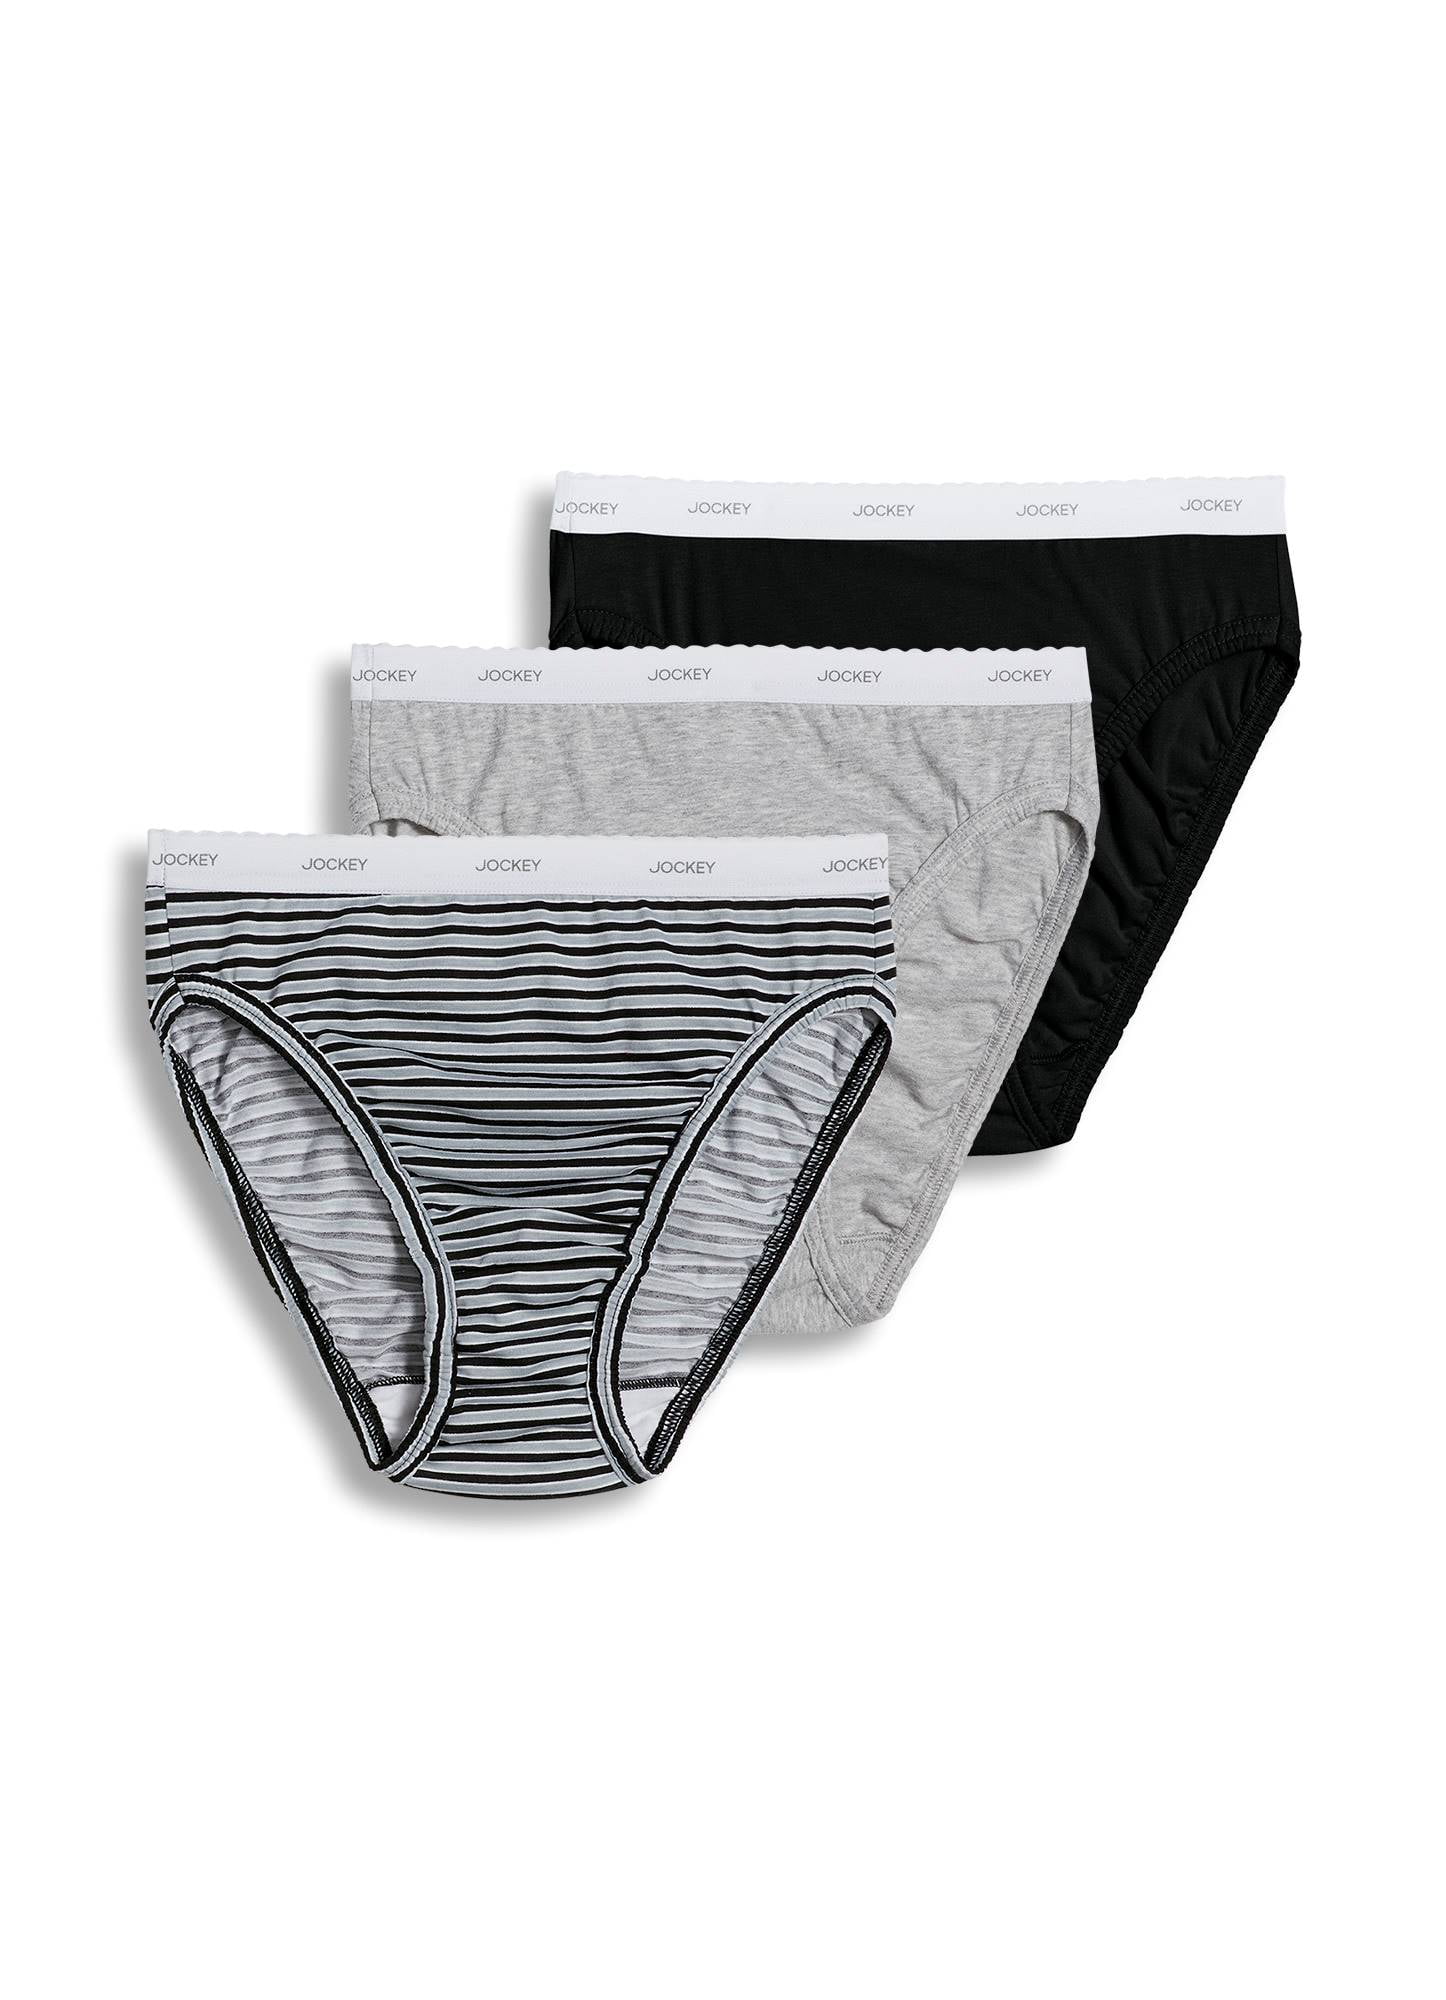 Jockey Women's Underwear Classic French Cut - 3 Pack, Ivory, 5